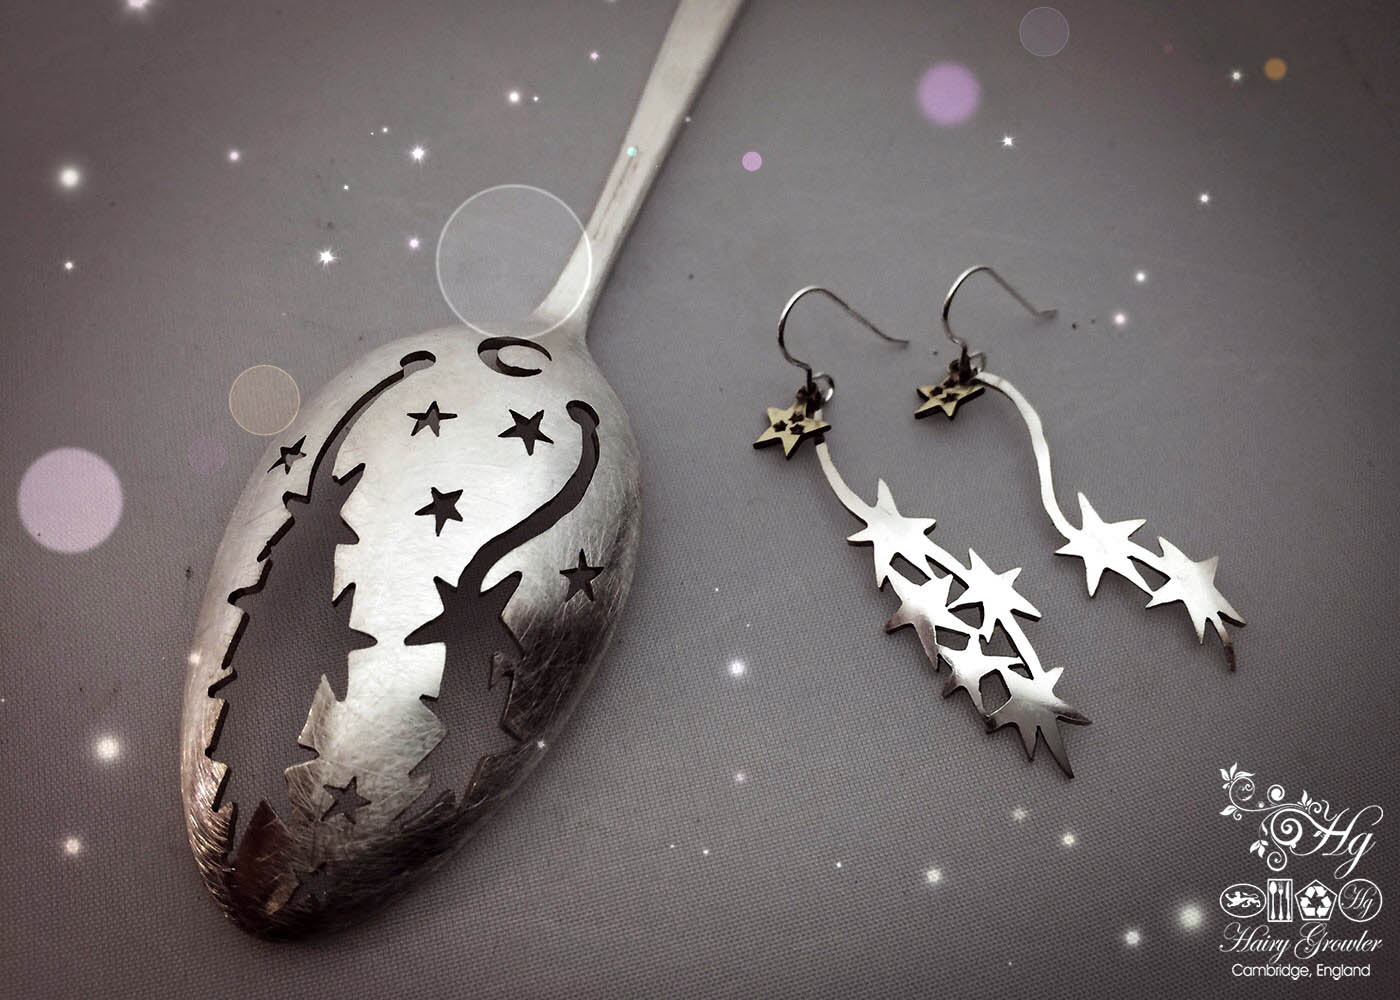 handmade and upcycled spoon star-burst earrings